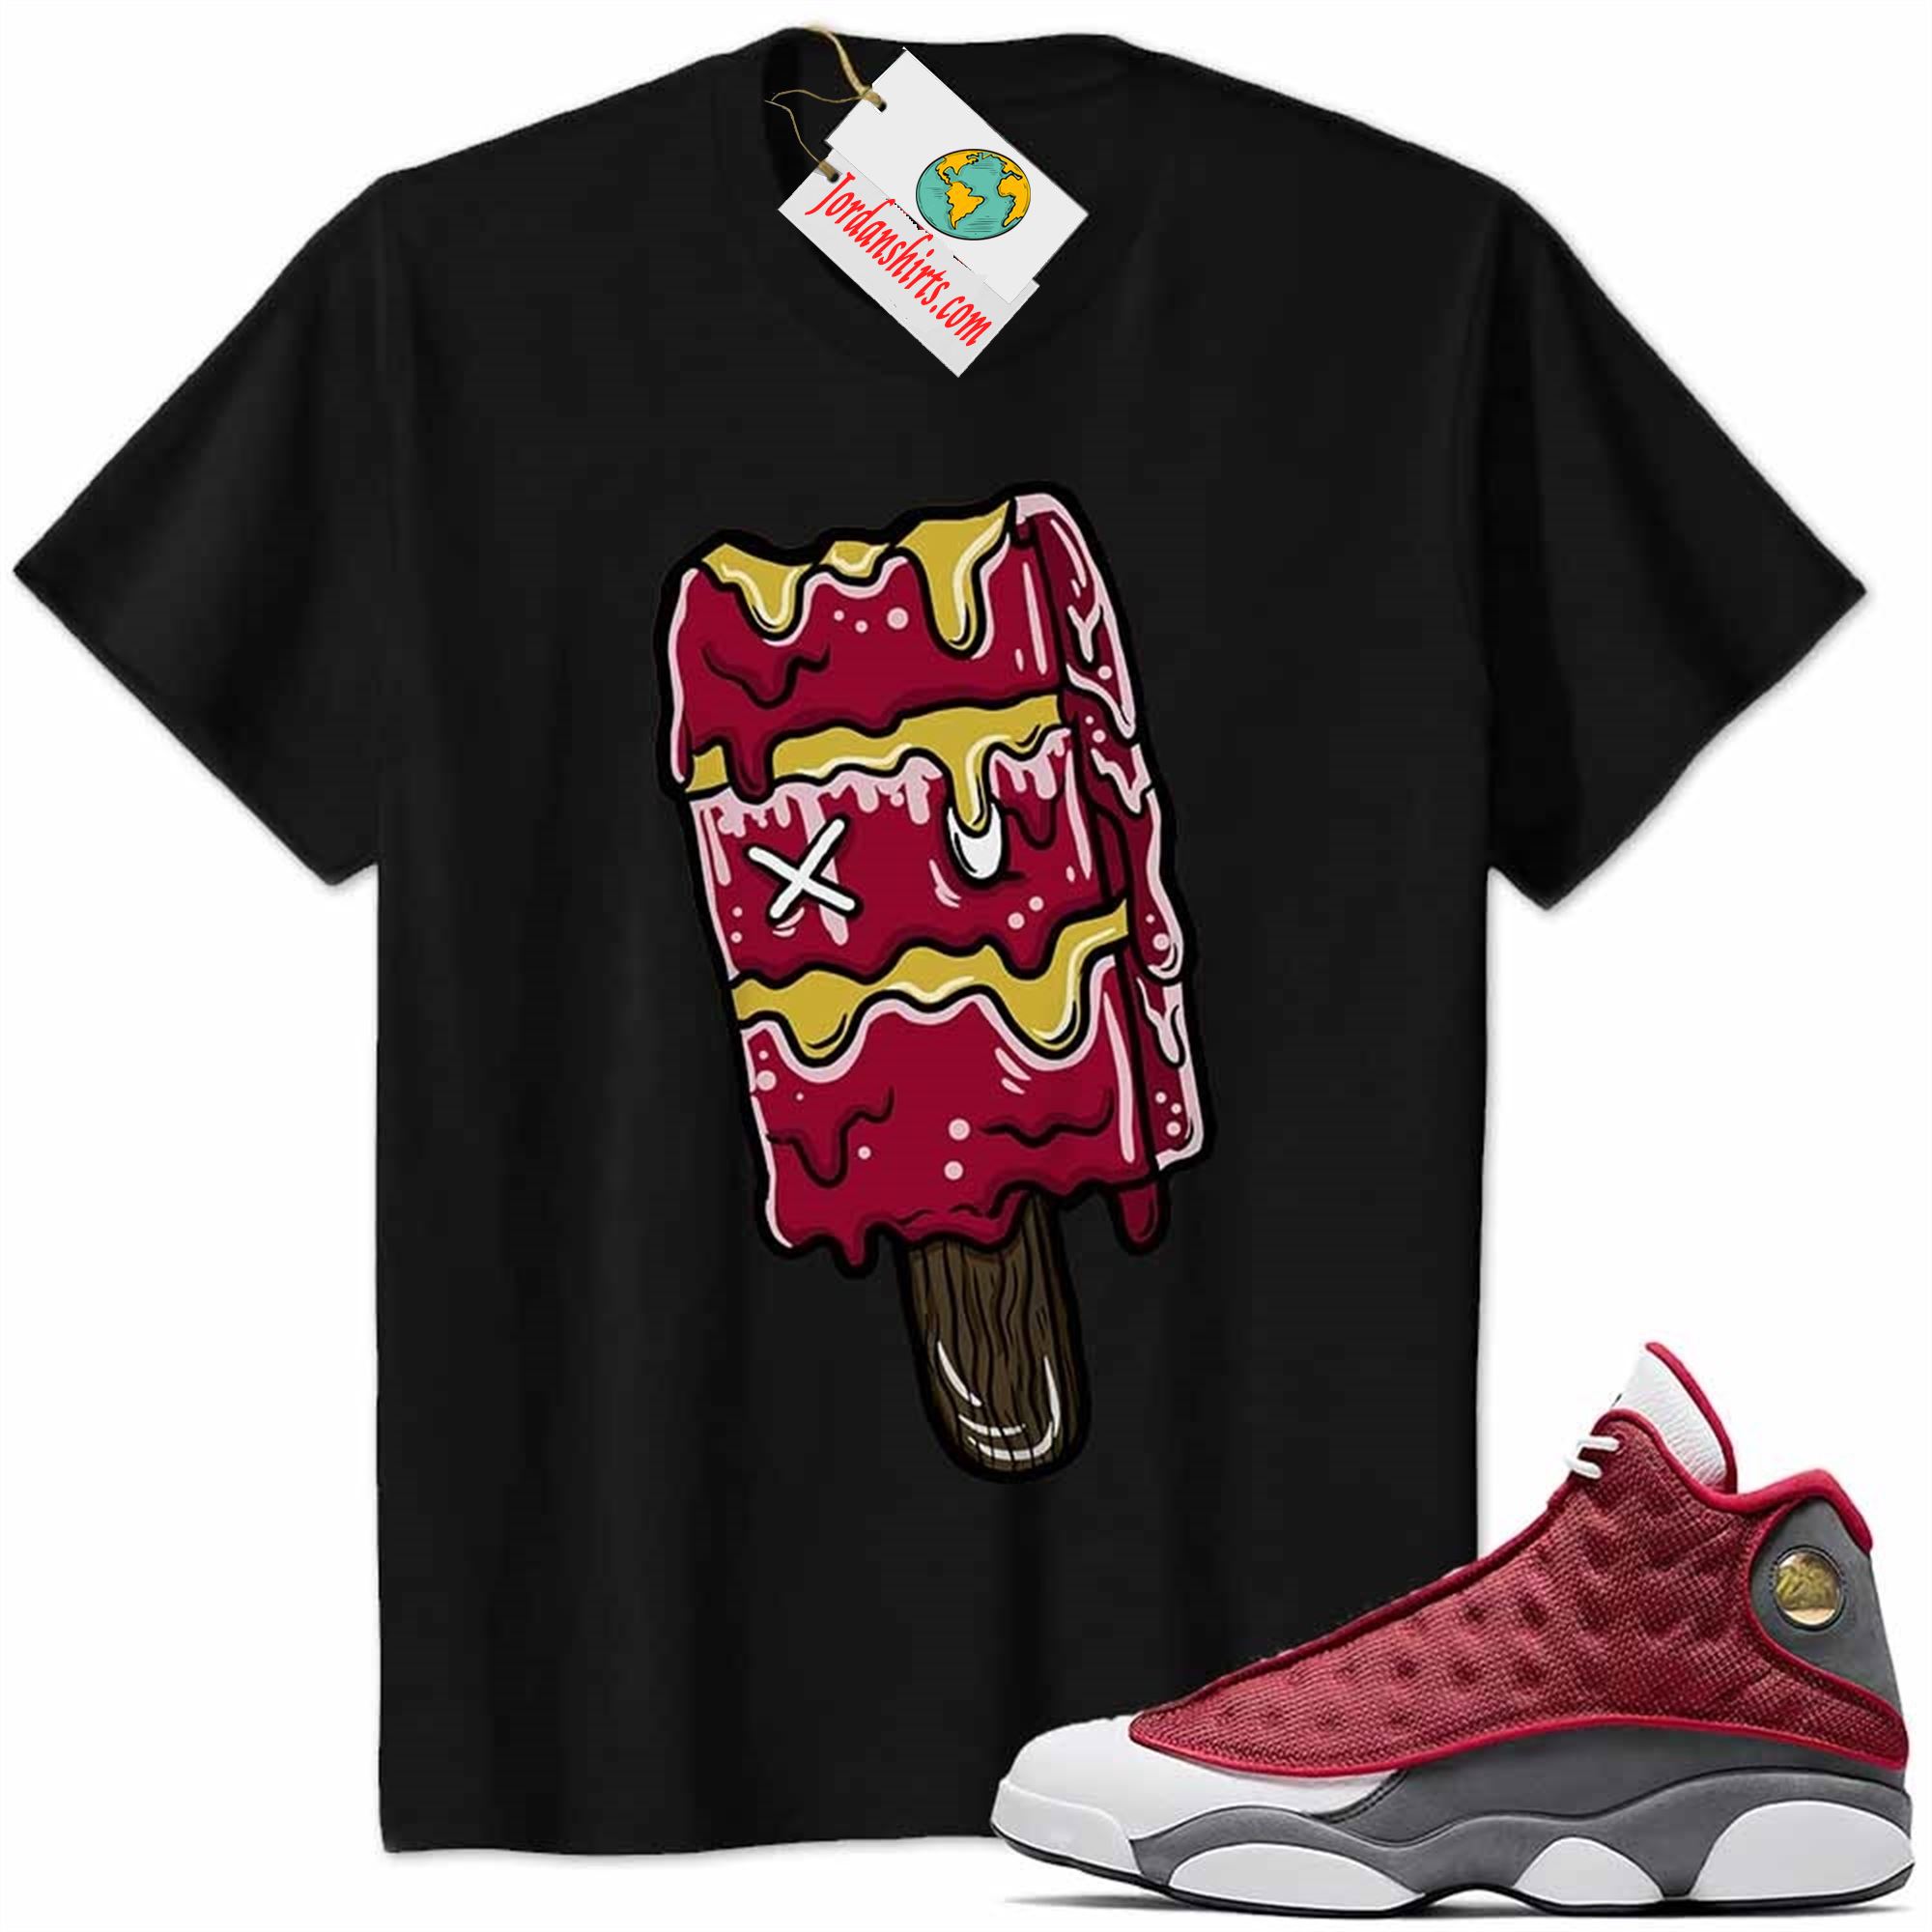 Jordan 13 Shirt, Ice Cream Dripping Black Air Jordan 13 Red Flint 13s Full Size Up To 5xl